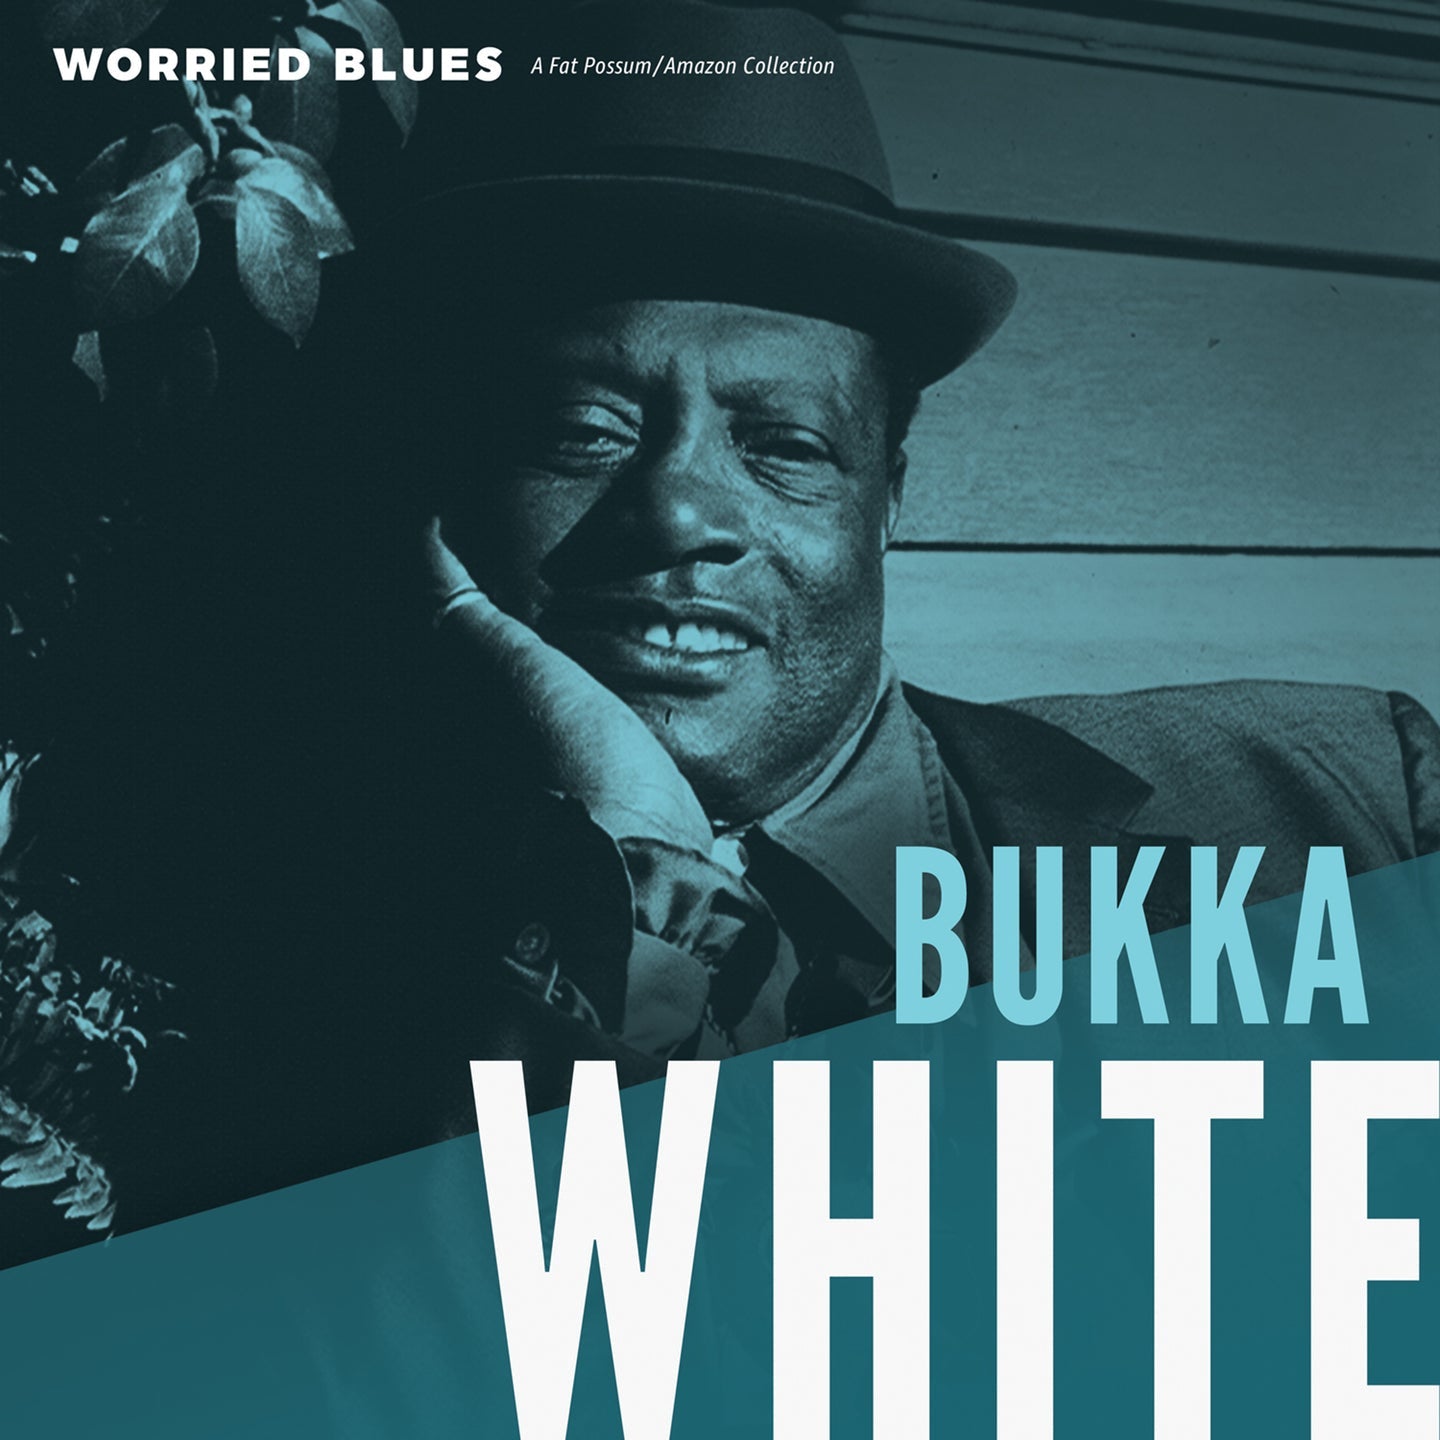 BUKKA WHITE - "WORRIED BLUES" LP